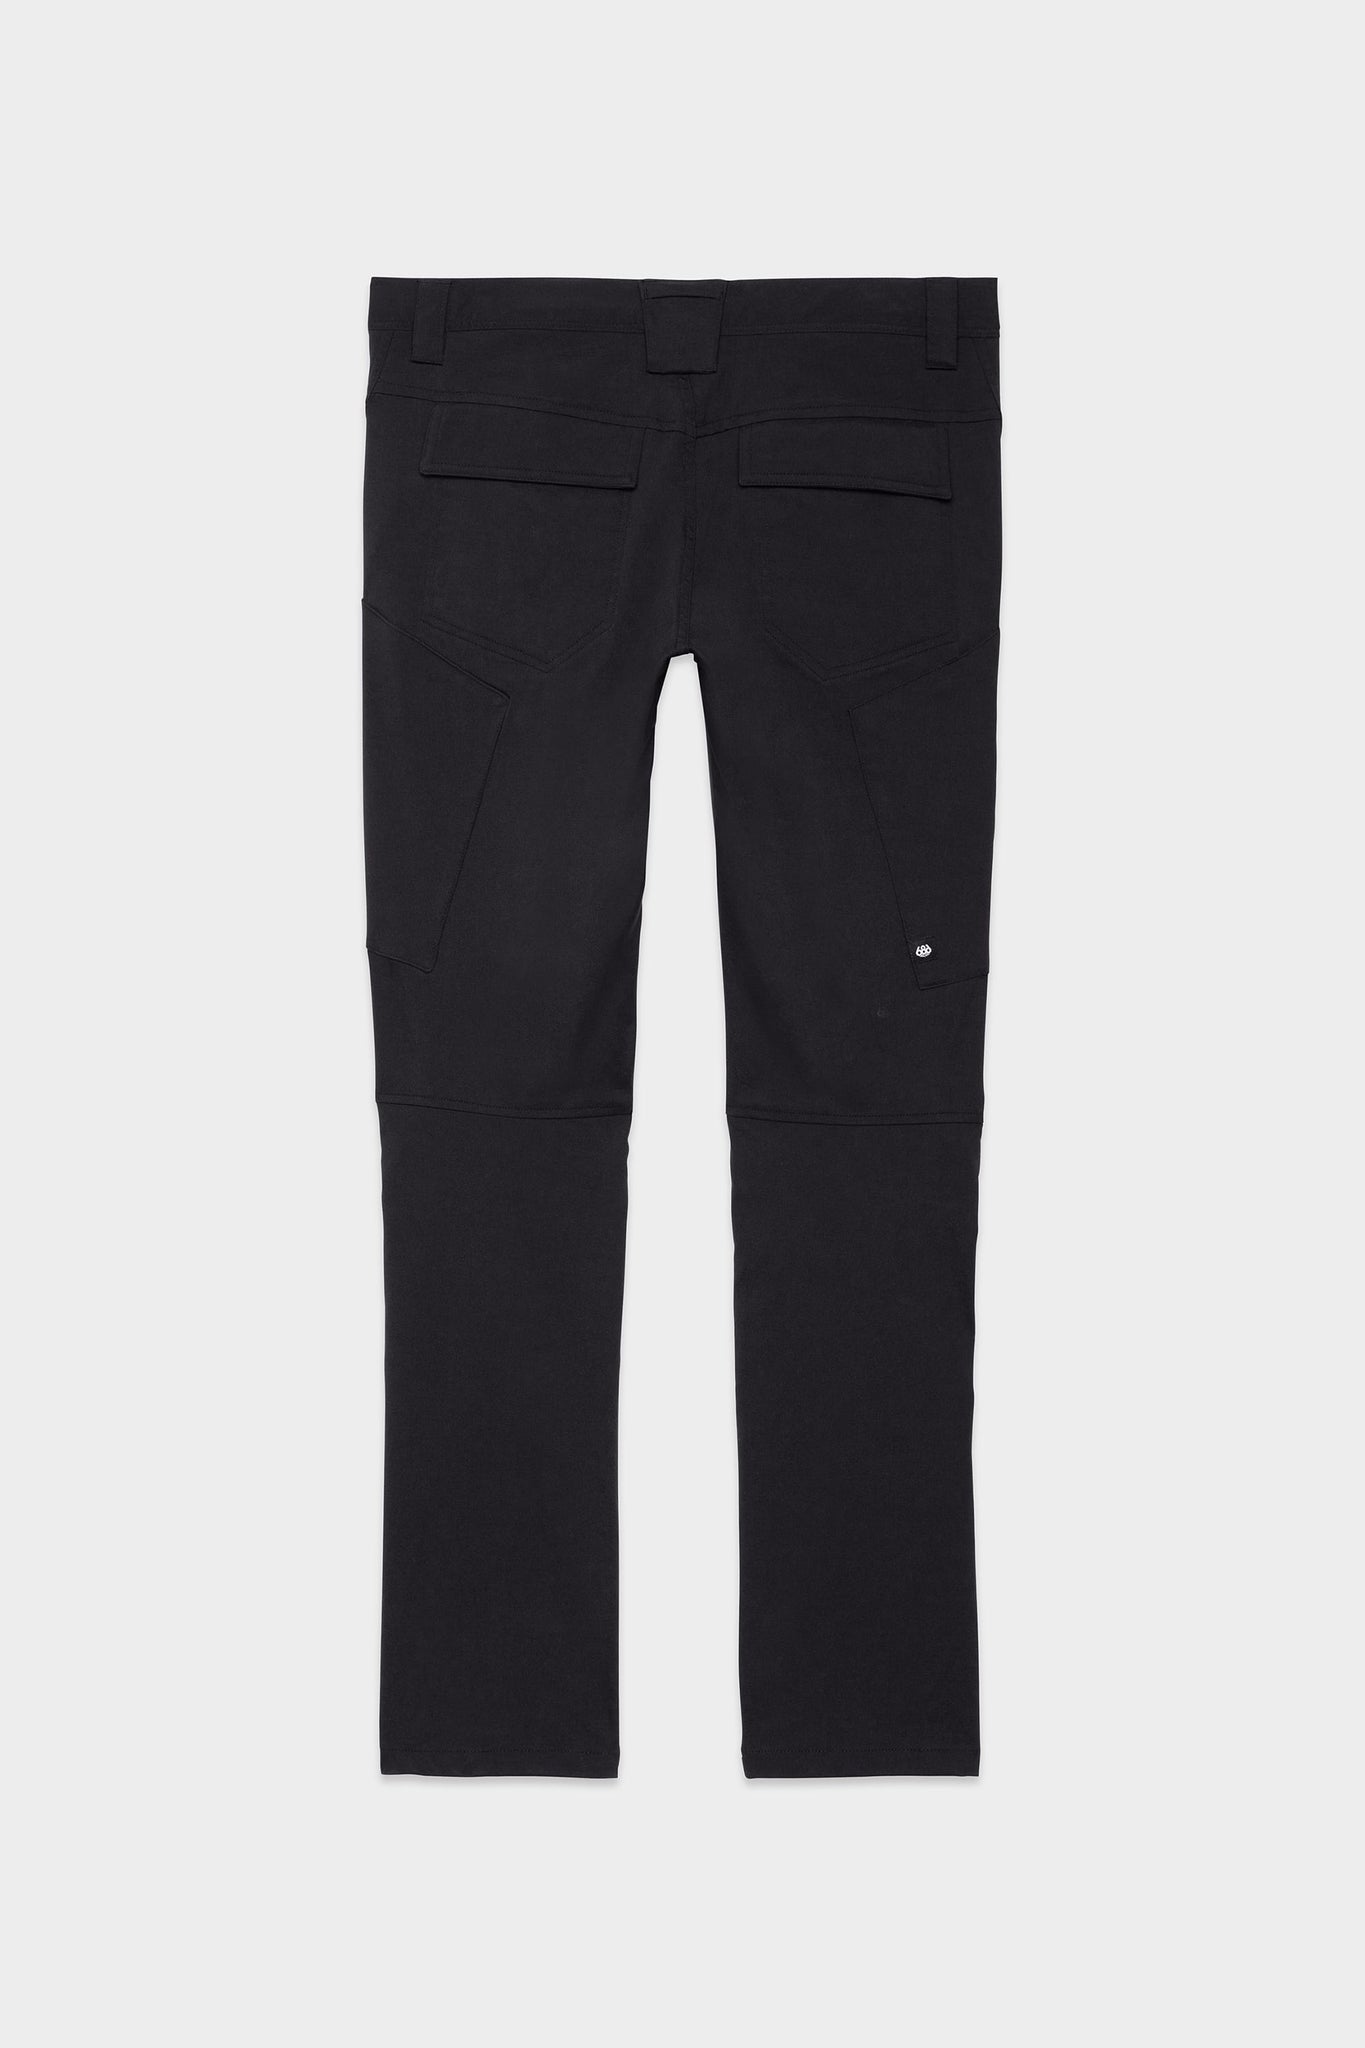 686 - Anything Cargo Pant Slim Fit Black